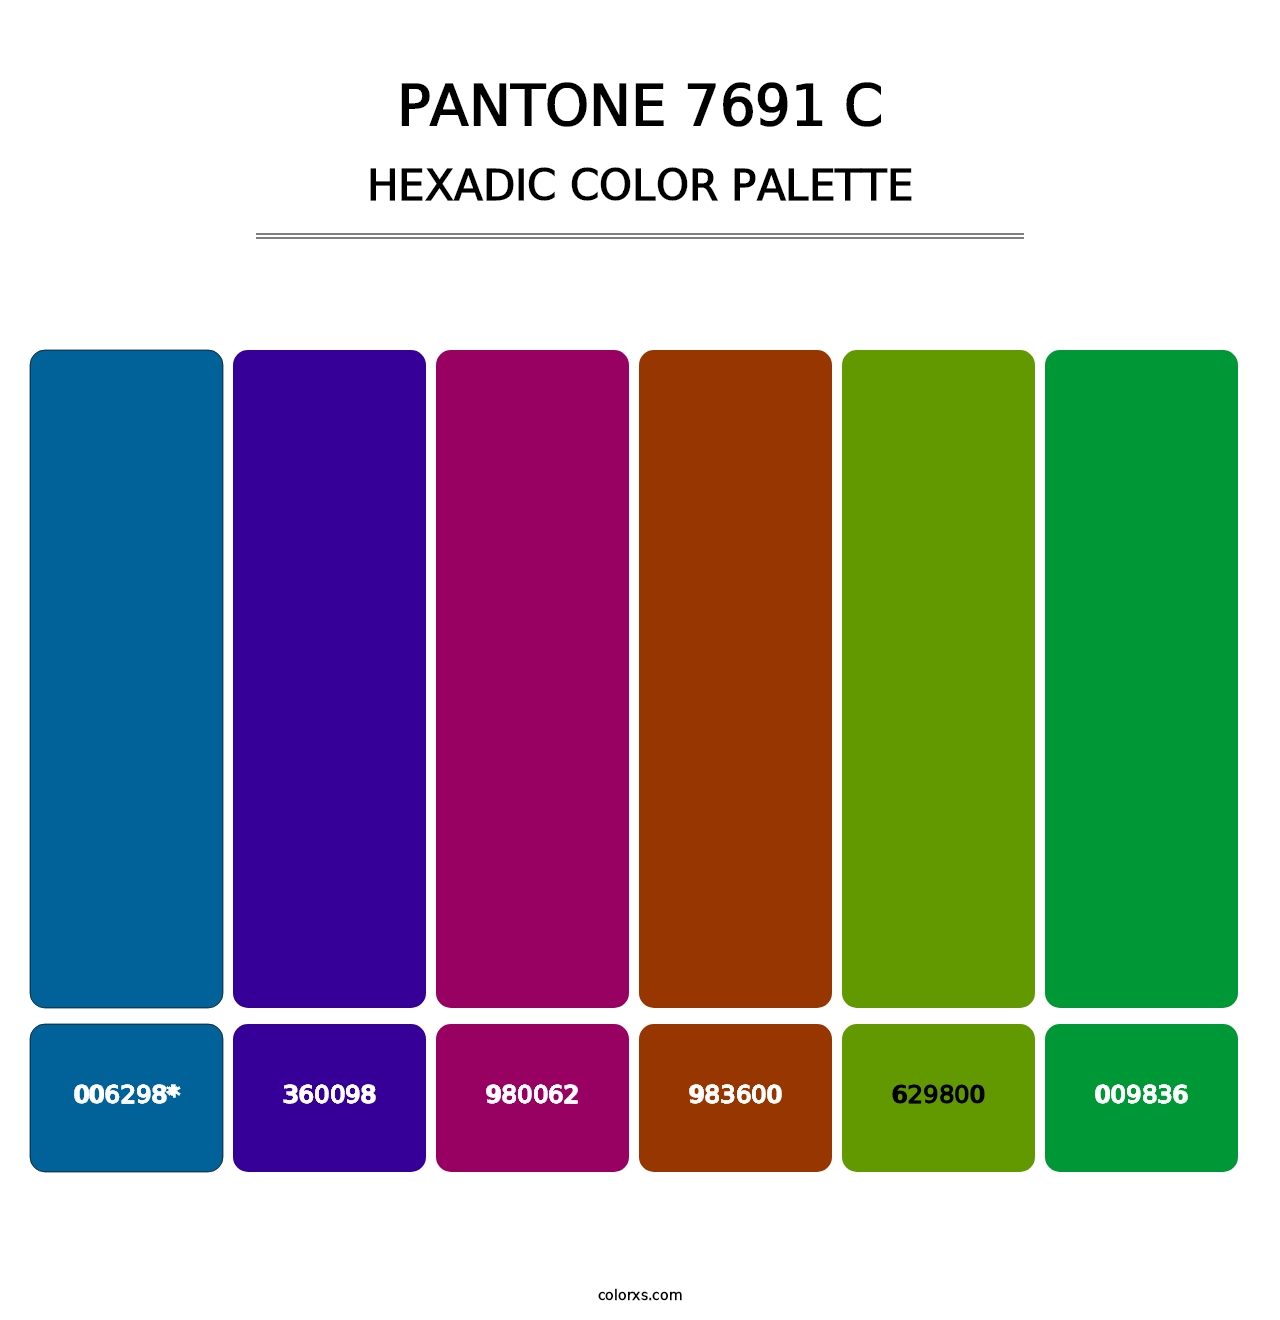 PANTONE 7691 C - Hexadic Color Palette